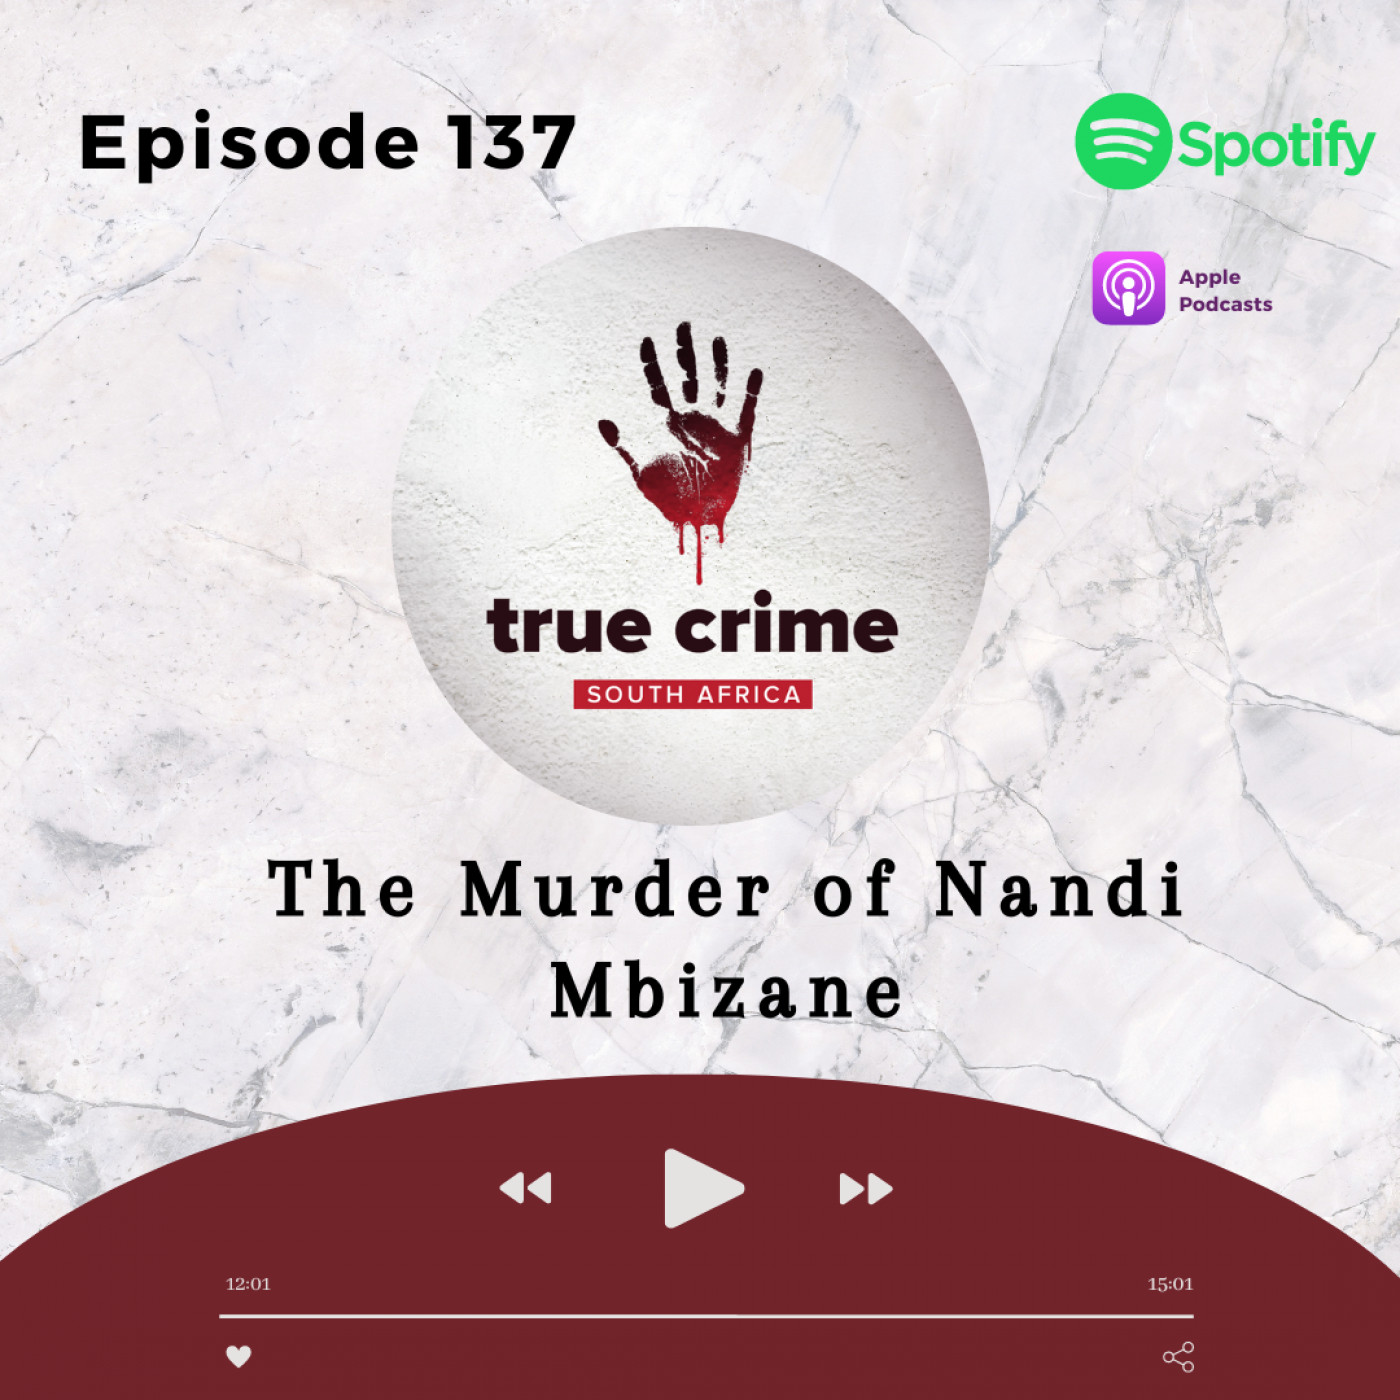 Episode 137 The Murder of Nandi Mbizane